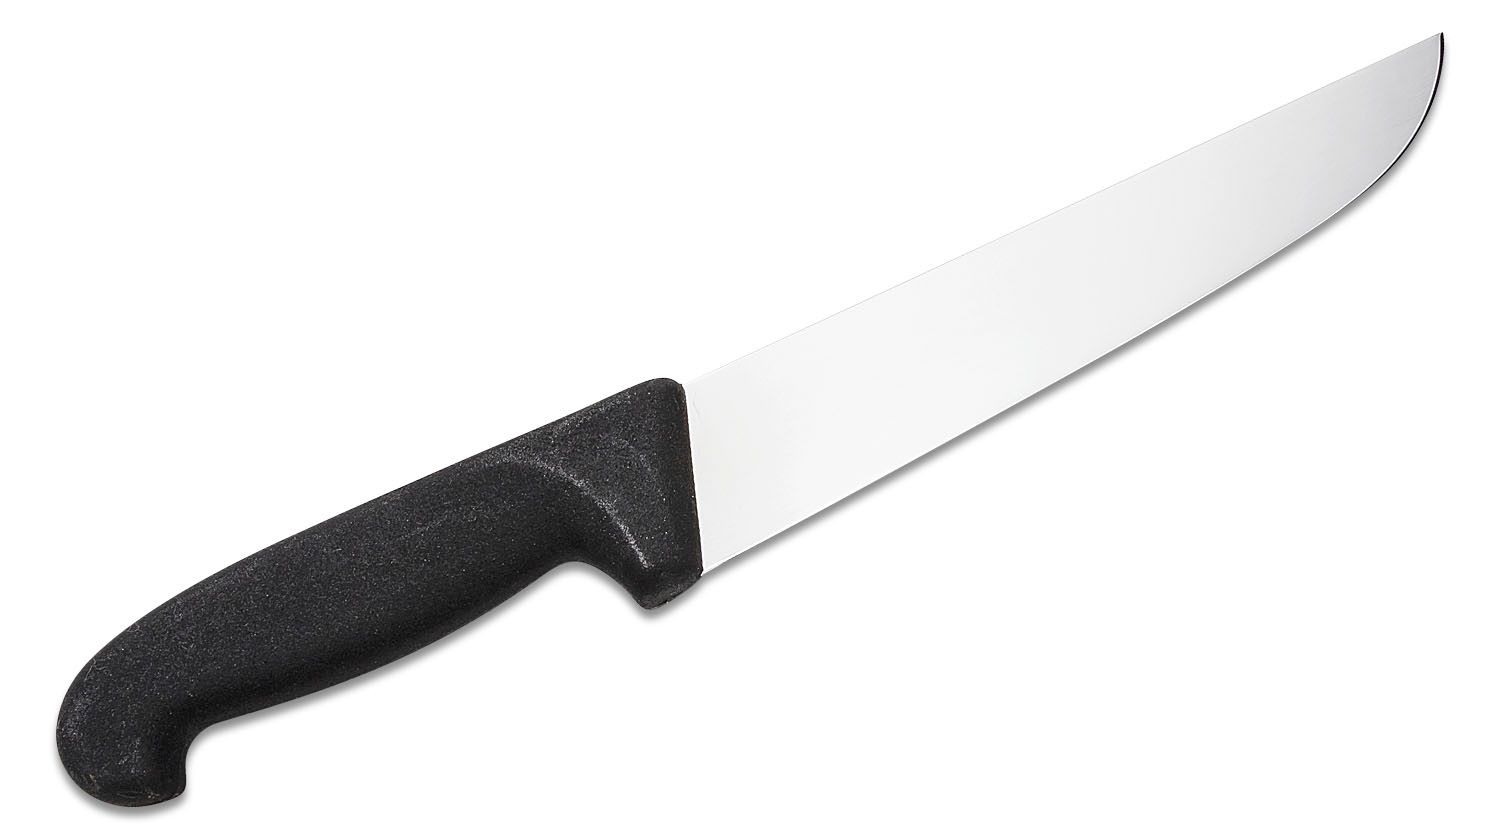 Victorinox - 5.2068.20 - 8 in Yellow Chef Knife